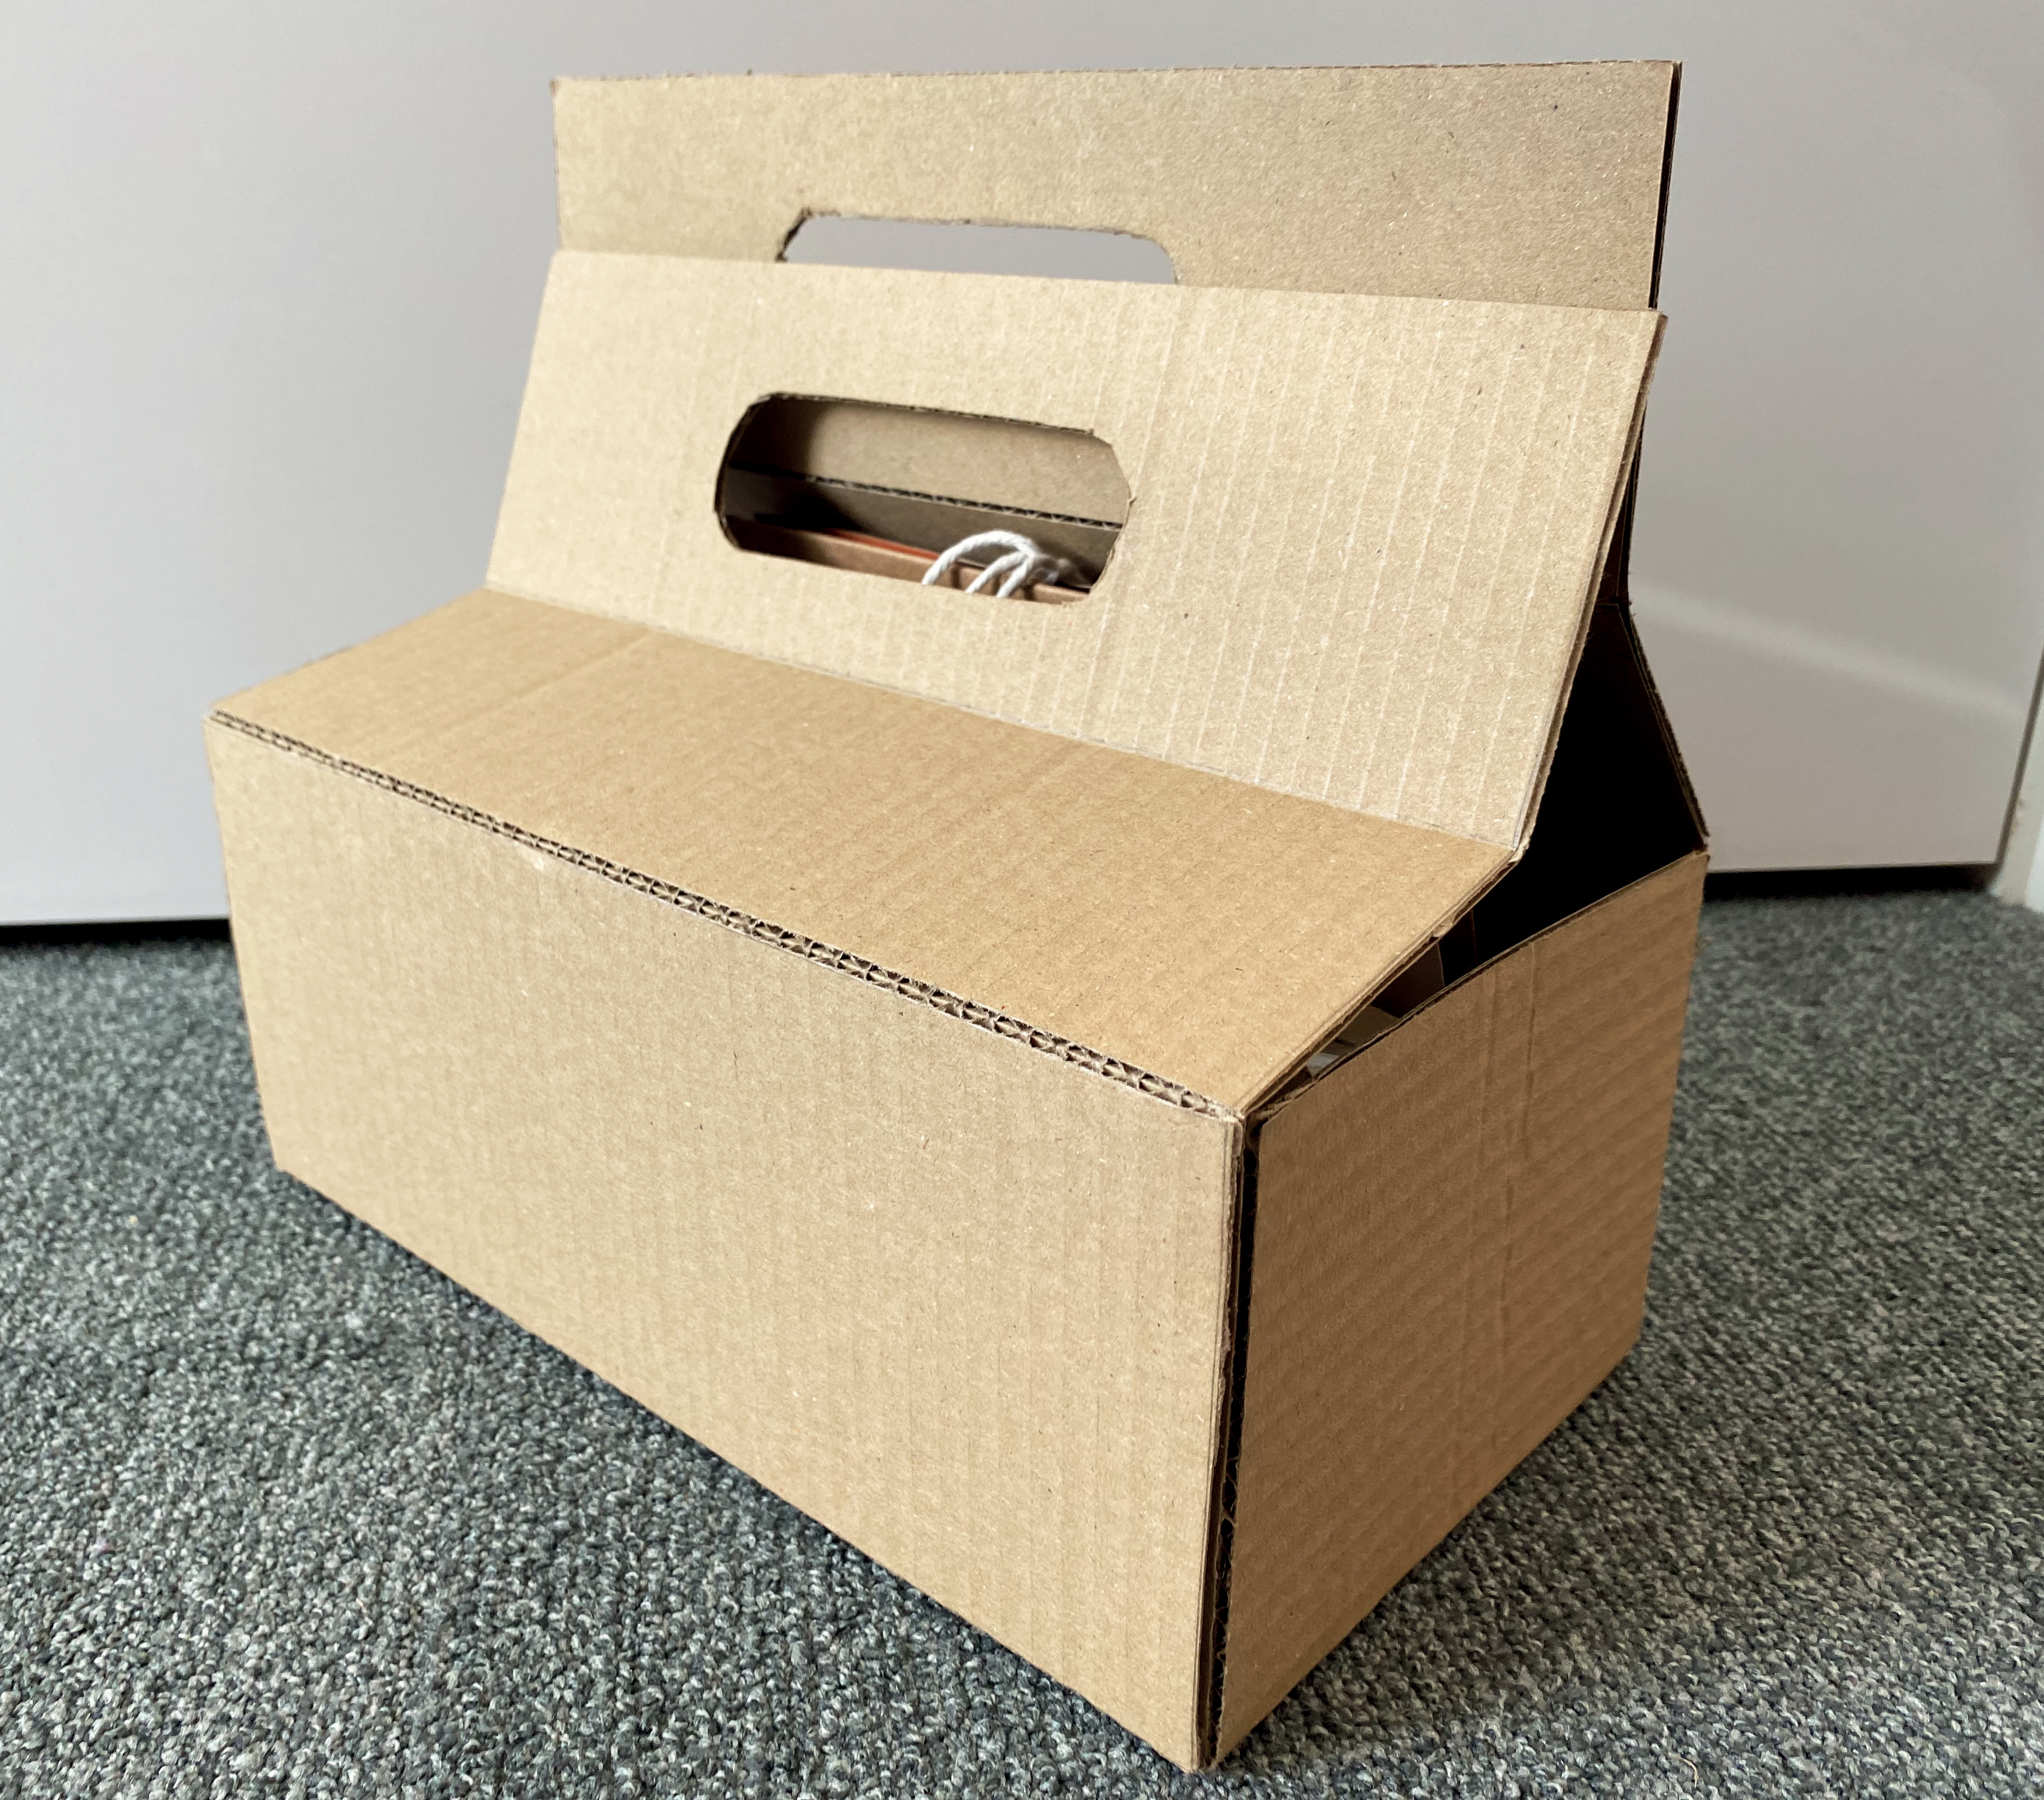 cardboard prototype of toolkit